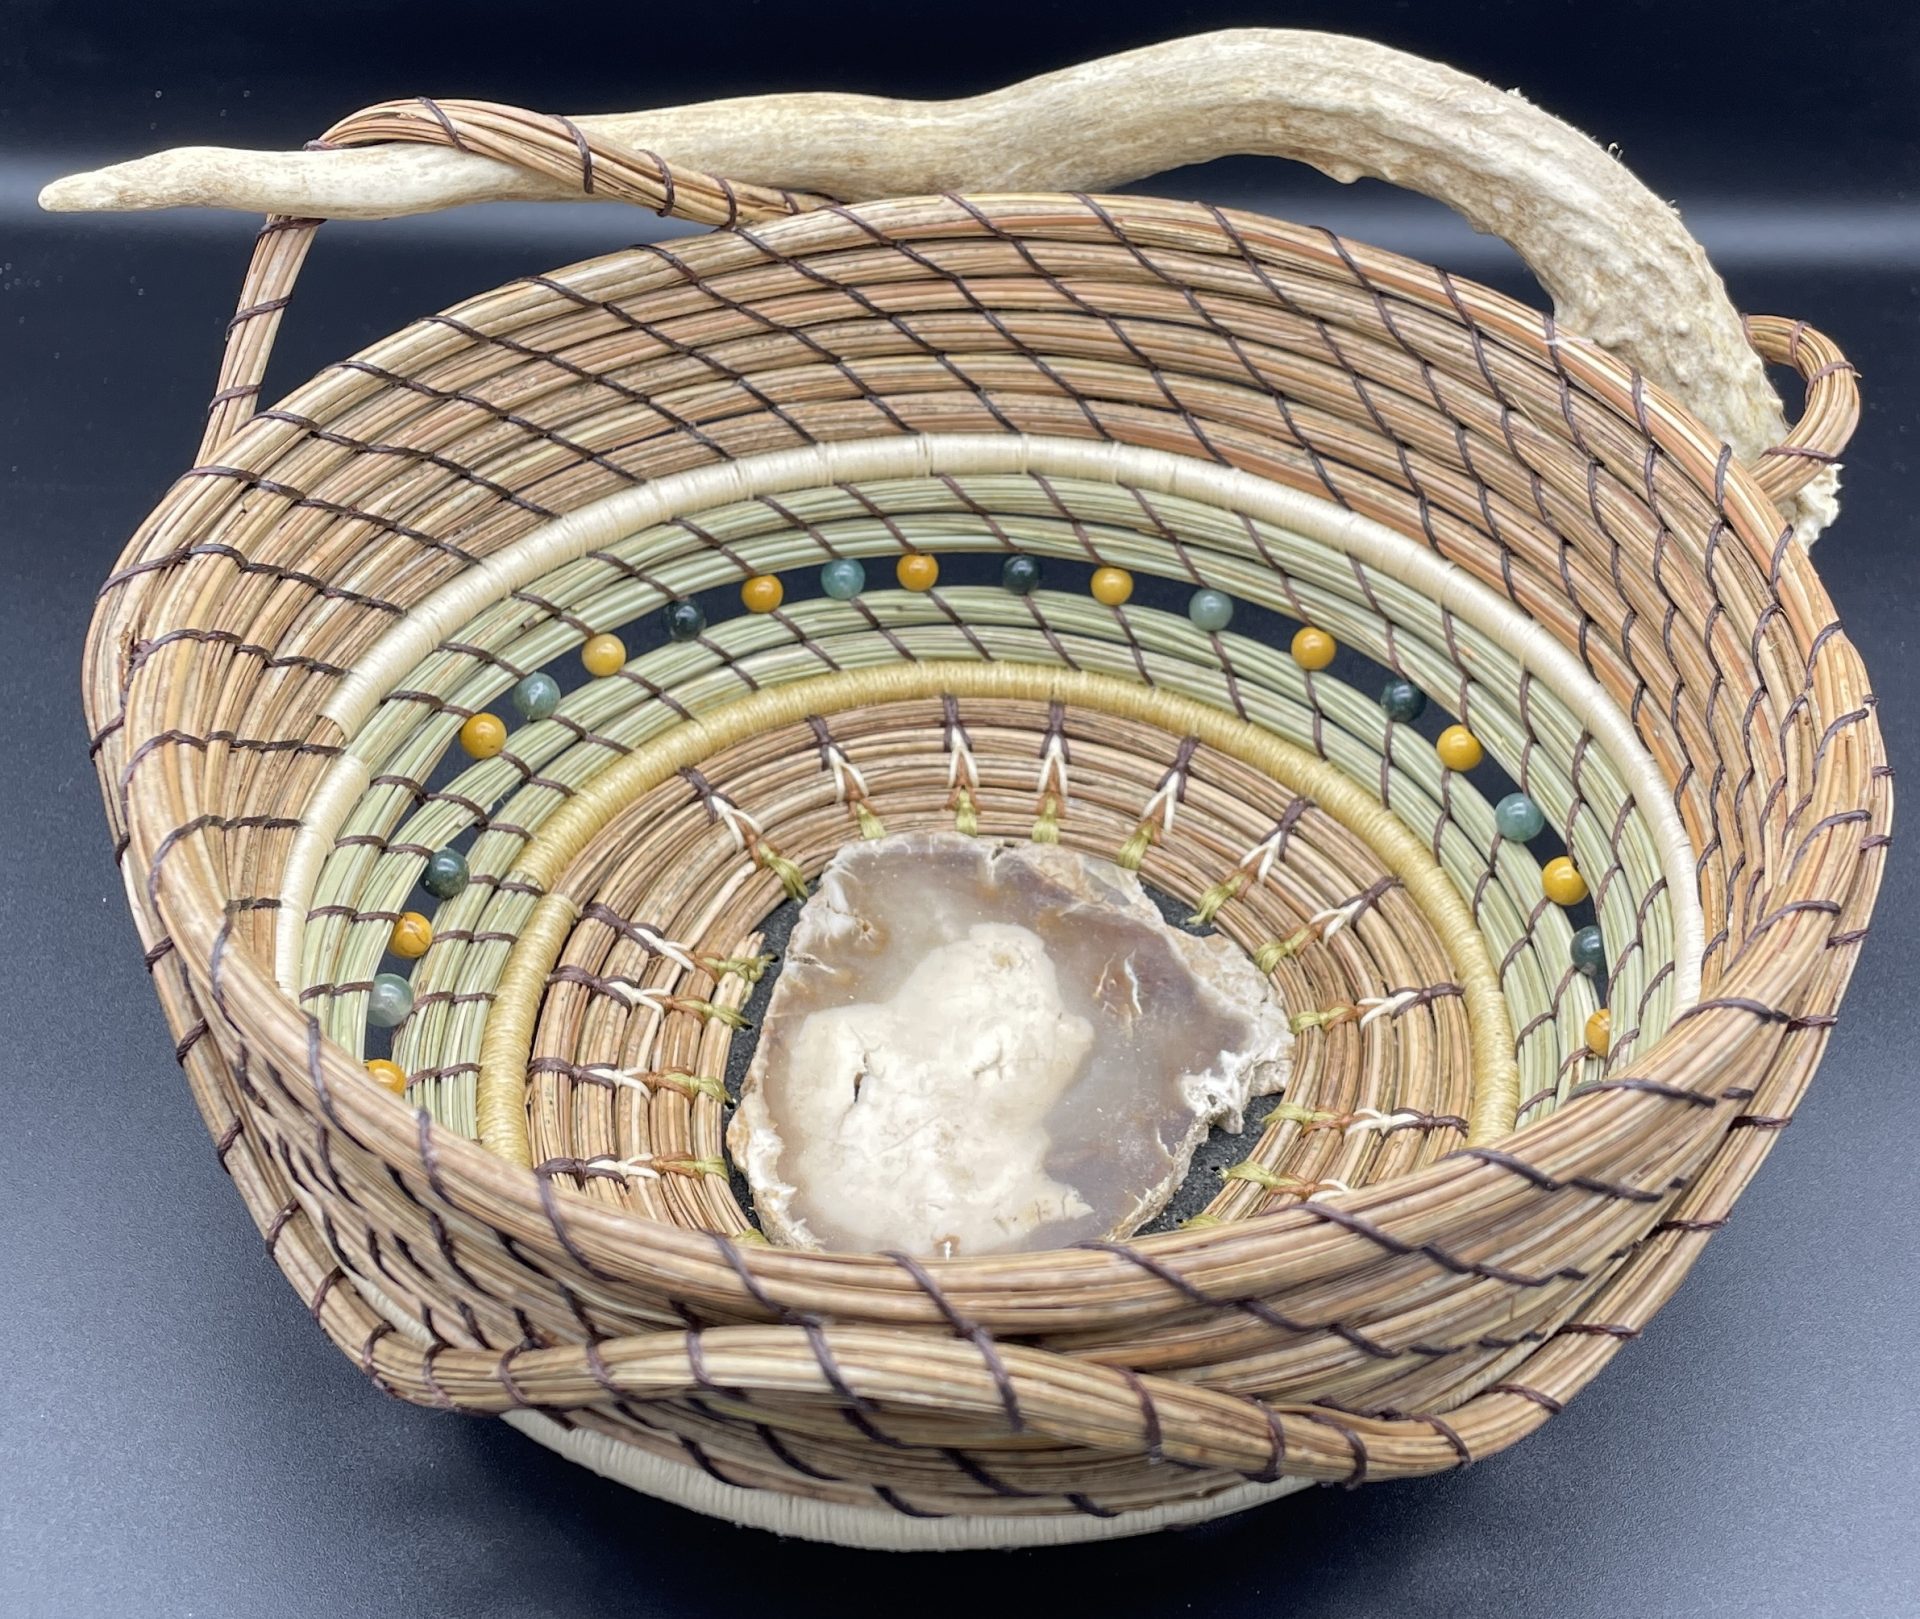 Petrified wood base basket with deer antler